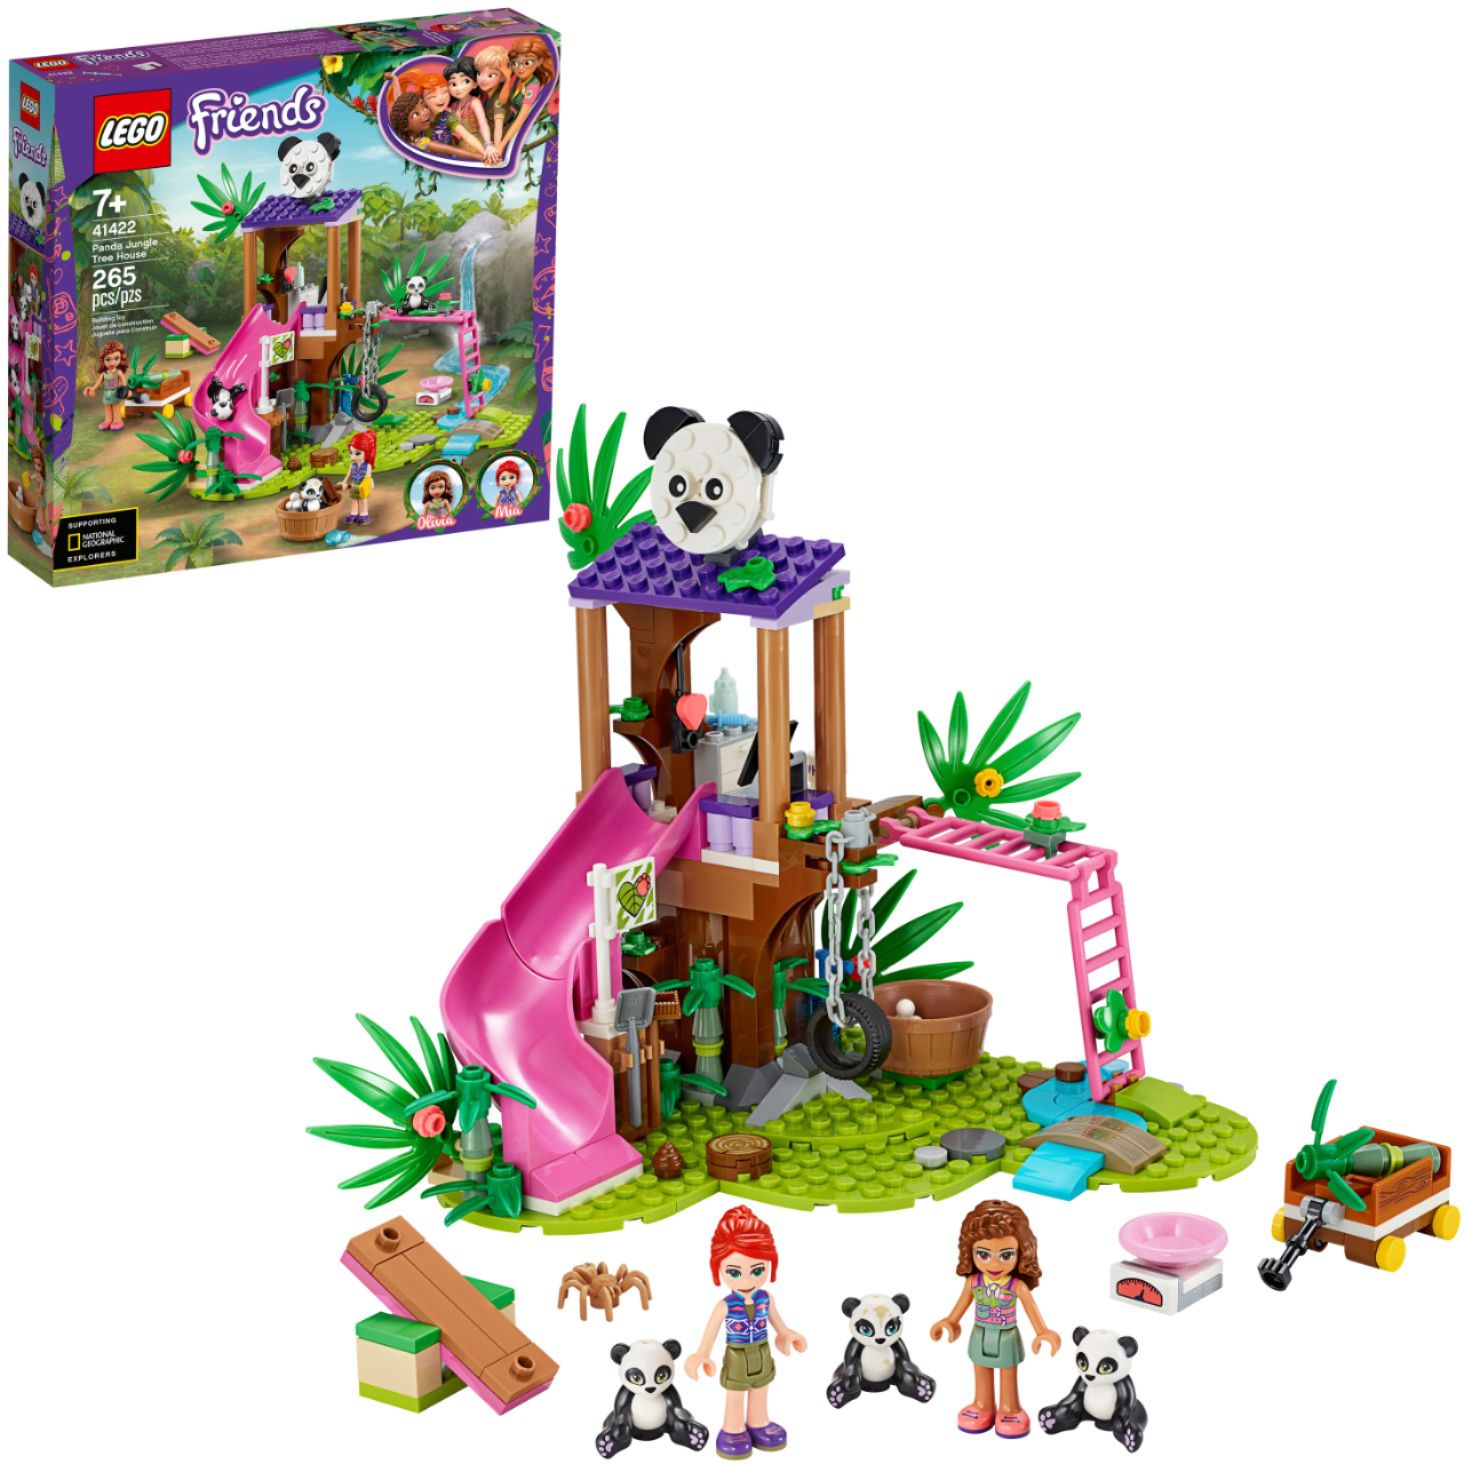 Customer Reviews: LEGO Friends Panda Jungle Tree House 41422 6289207 ...